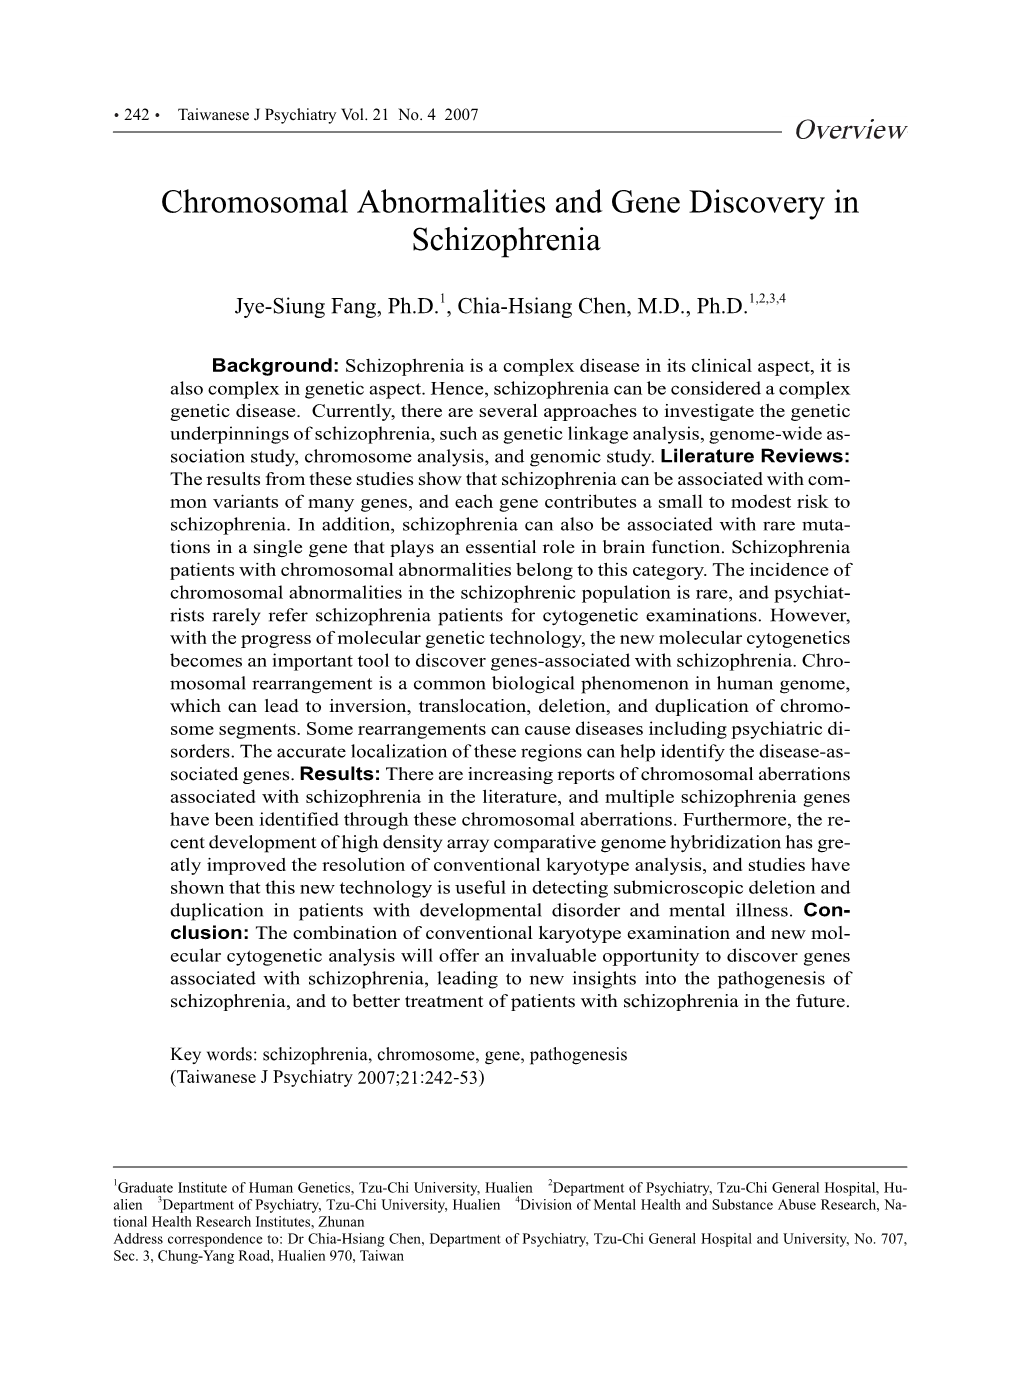 Chromosomal Abnormalities and Gene Discovery in Schizophrenia